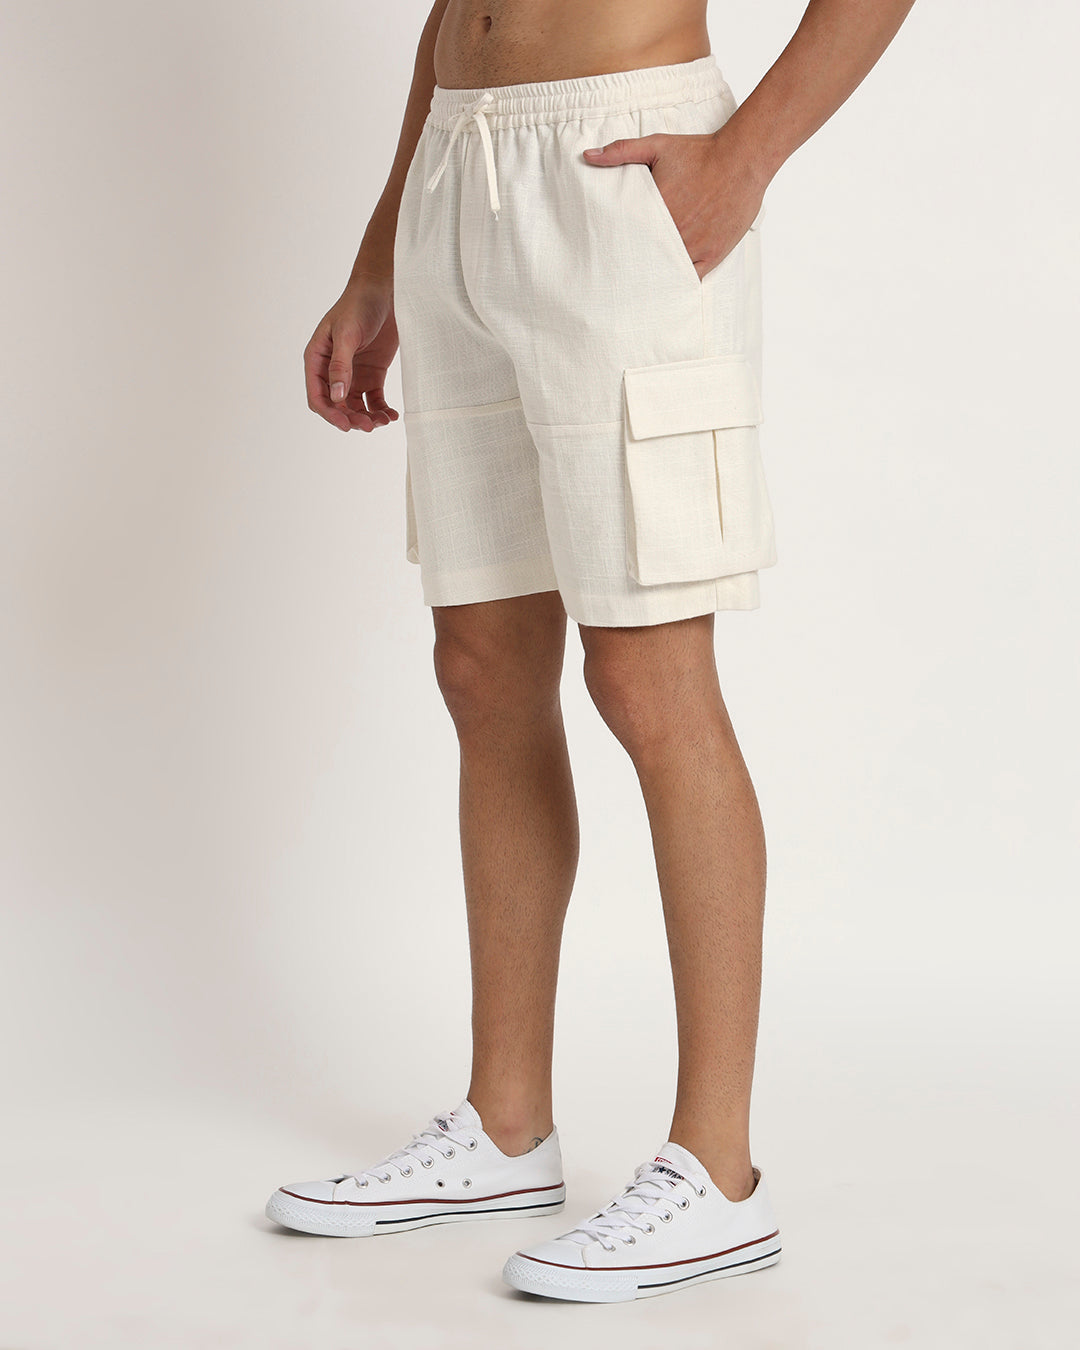 Combo: Classic Green Gleam Half Sleeves Men's Shirt & Cargo Shorts